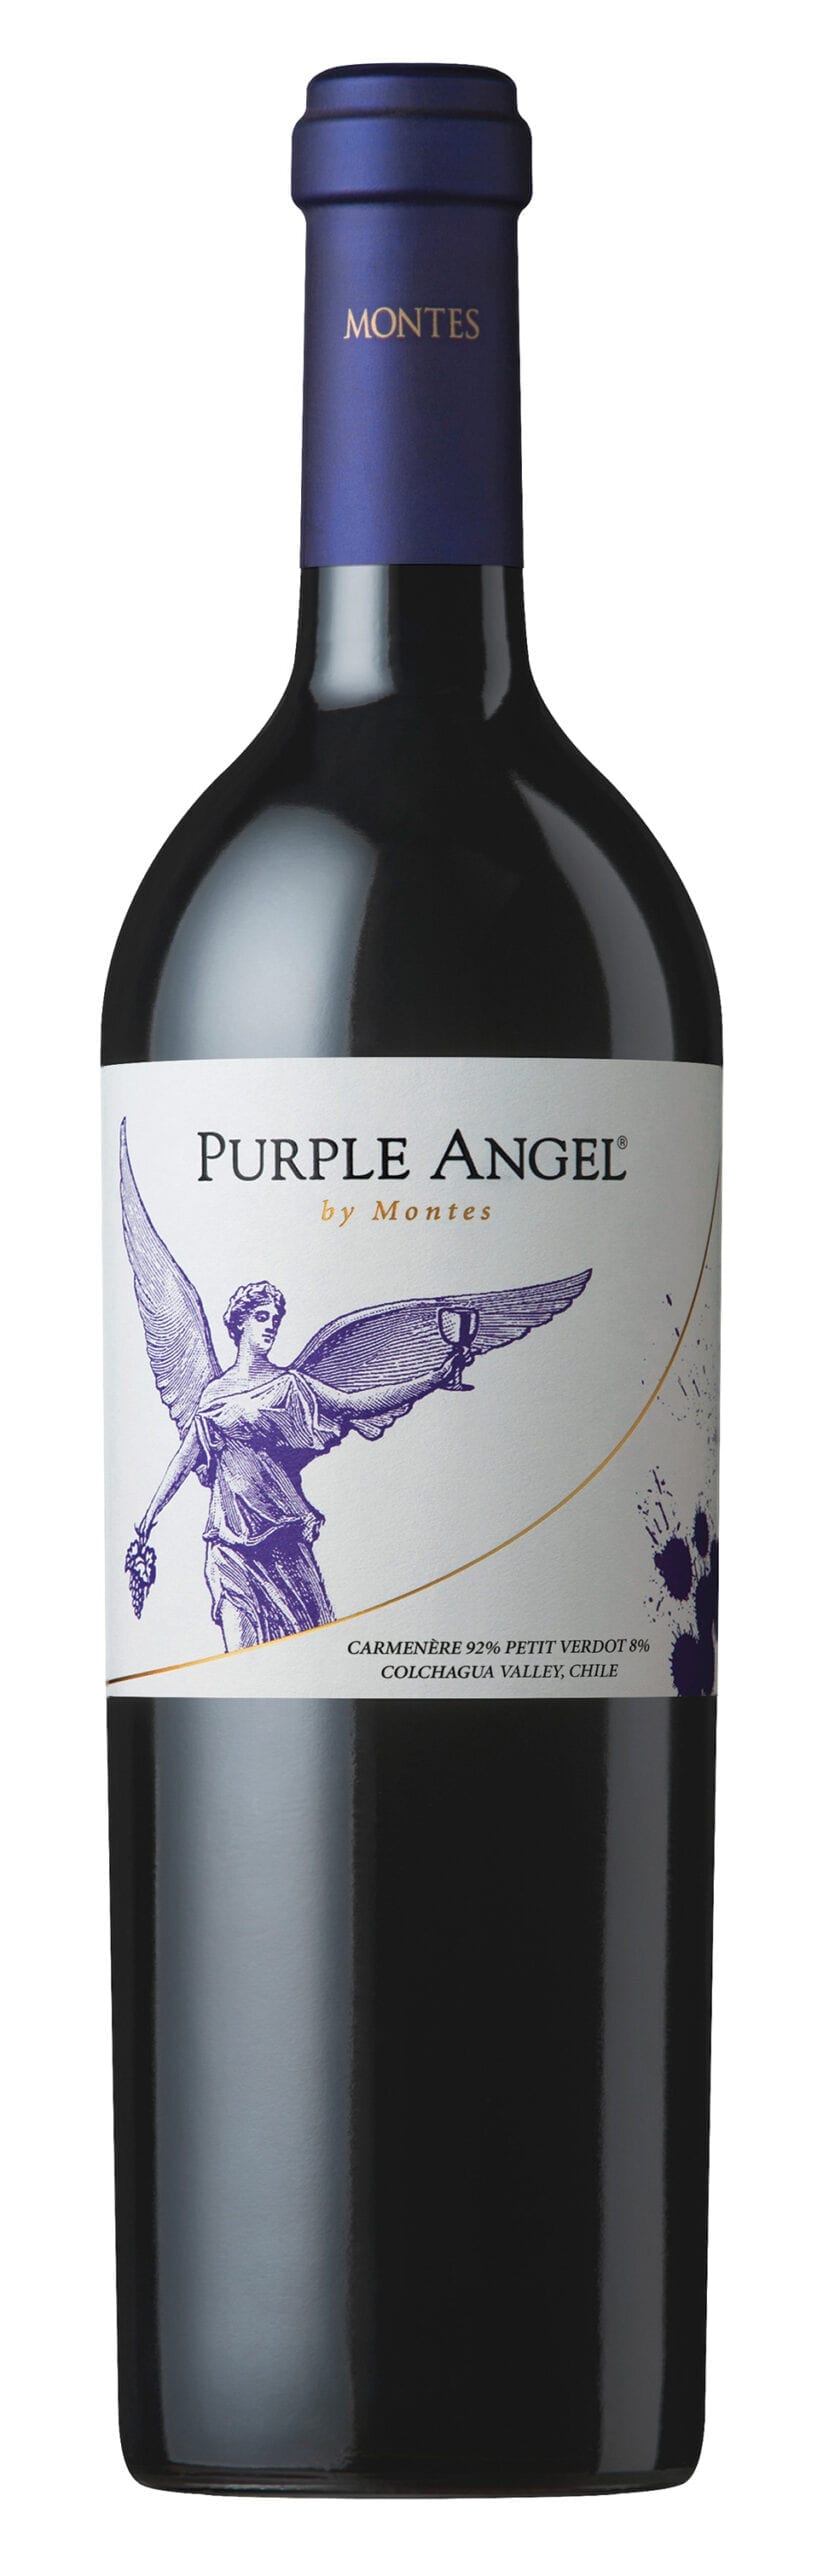 Montes 2017 Purple Angel